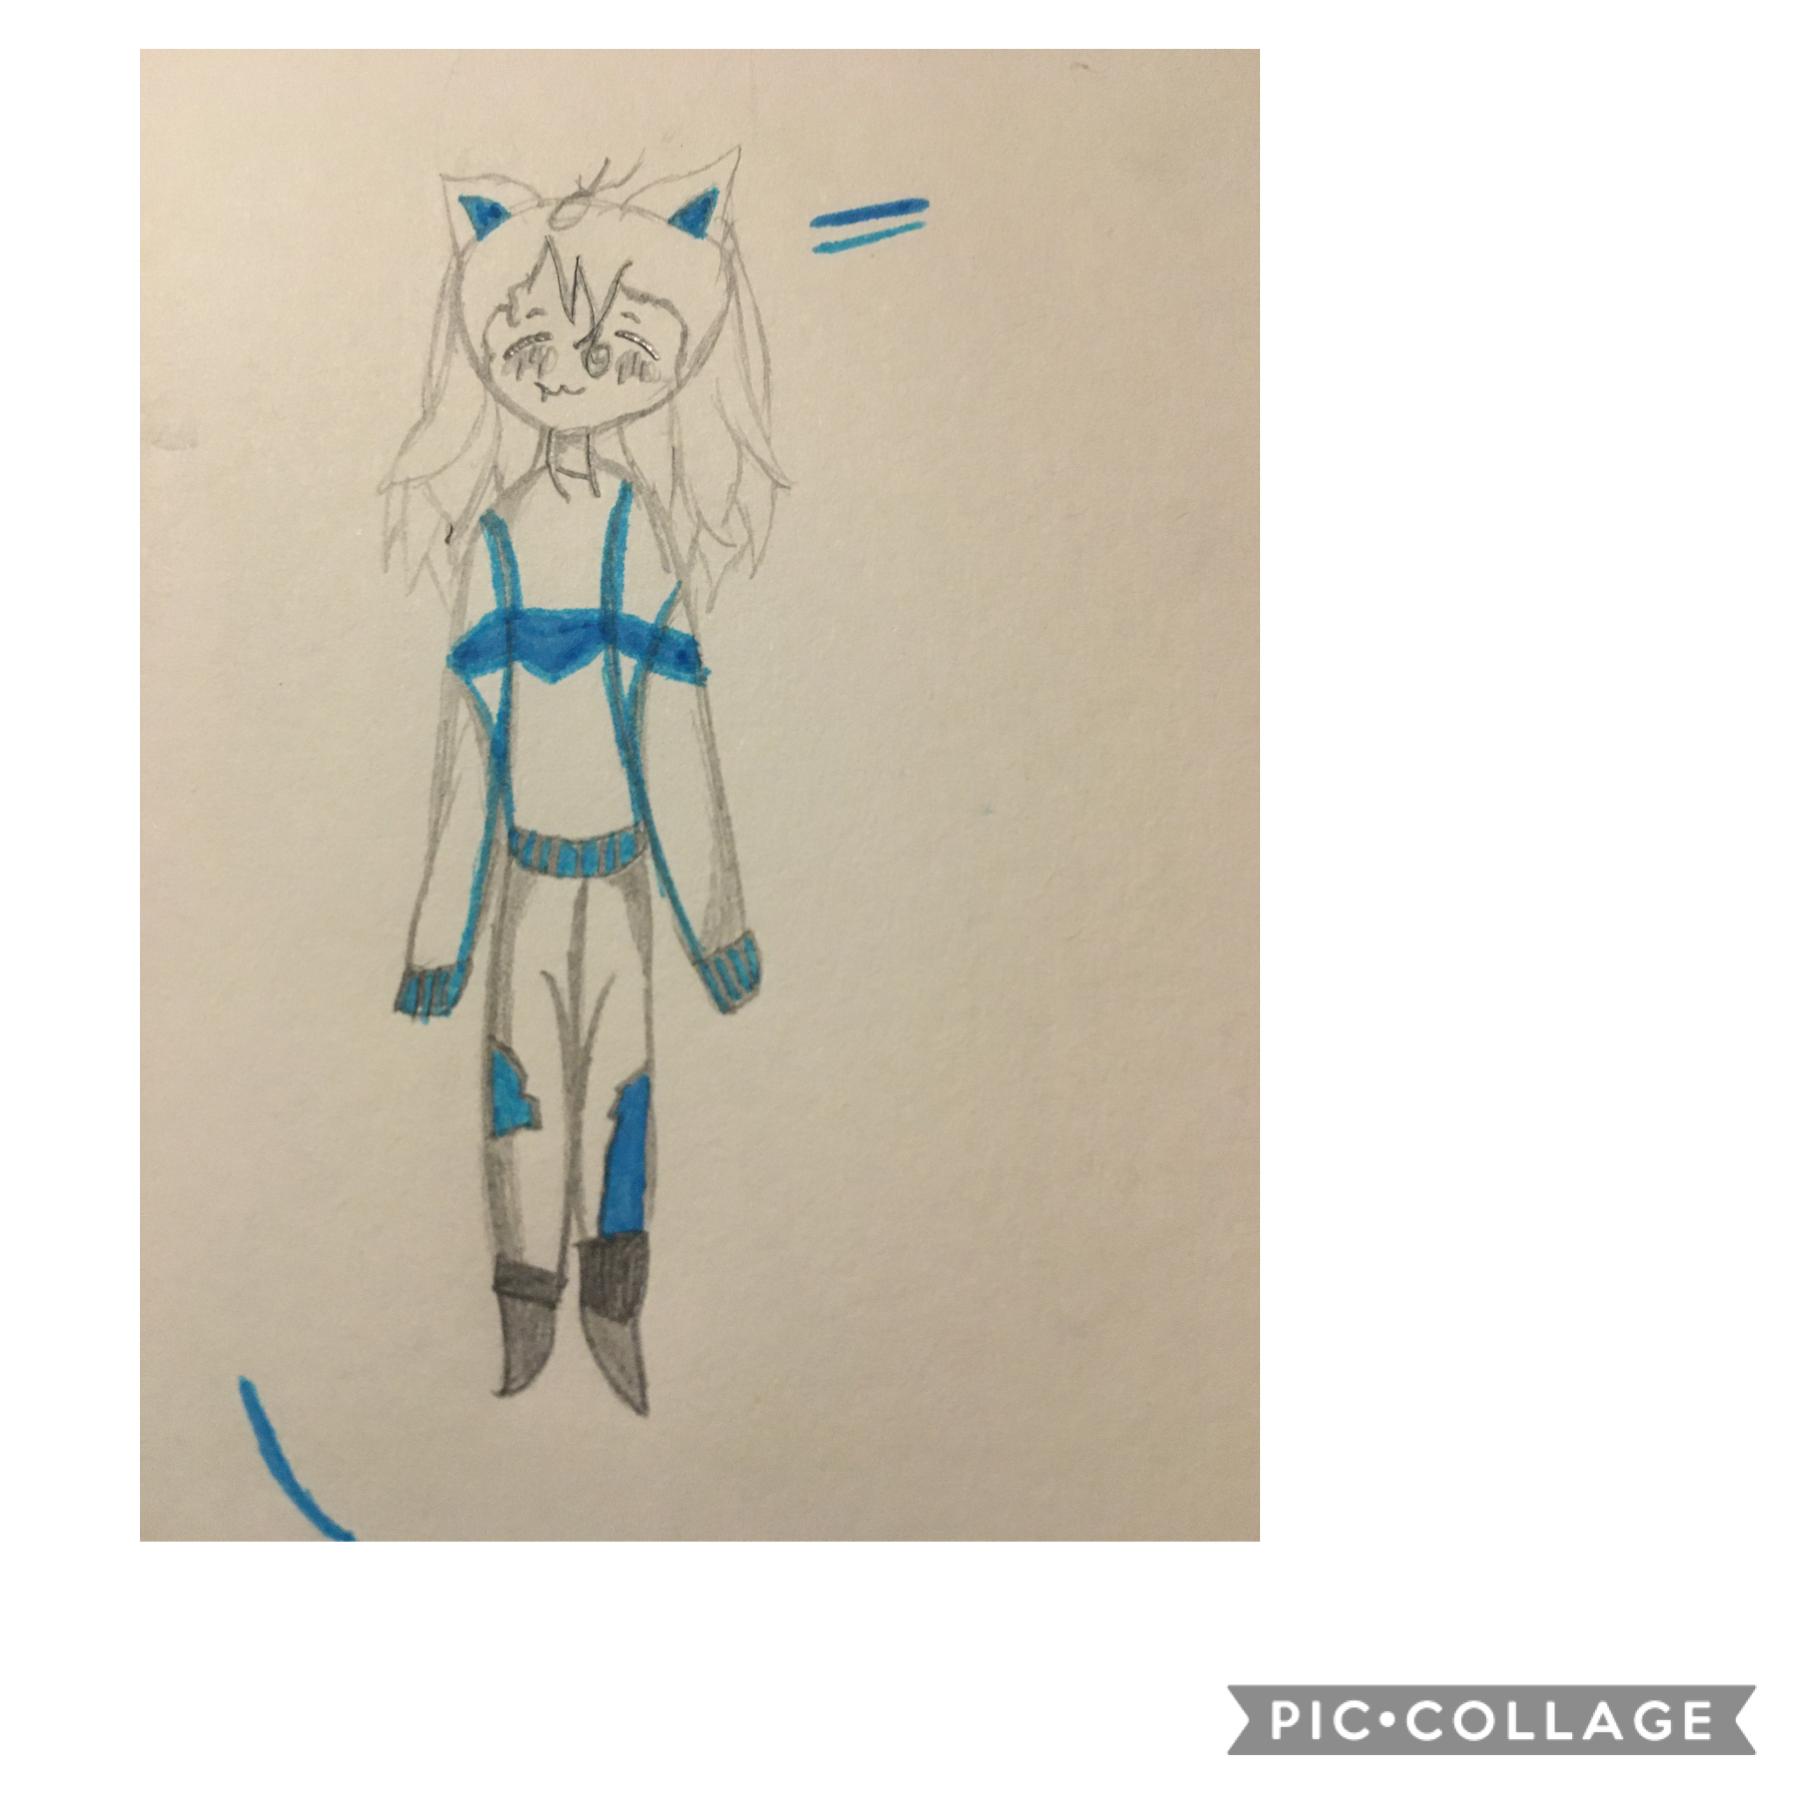 Cat/Human Drawing
OC, Request, Female, Cat